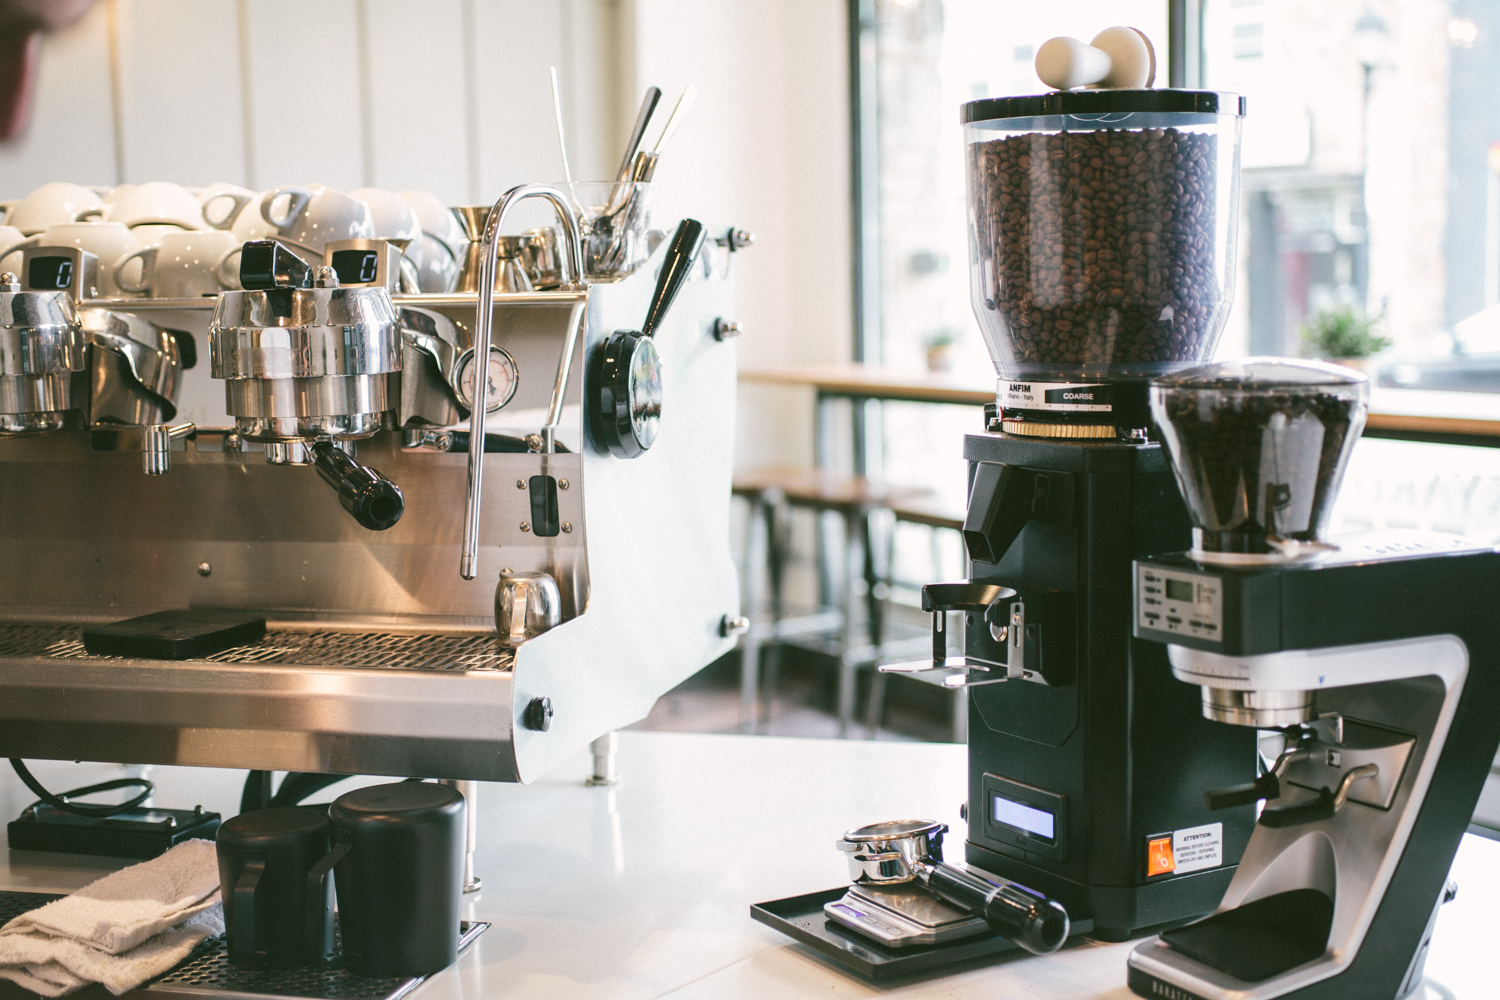 Image of espresso machine and coffee grinder